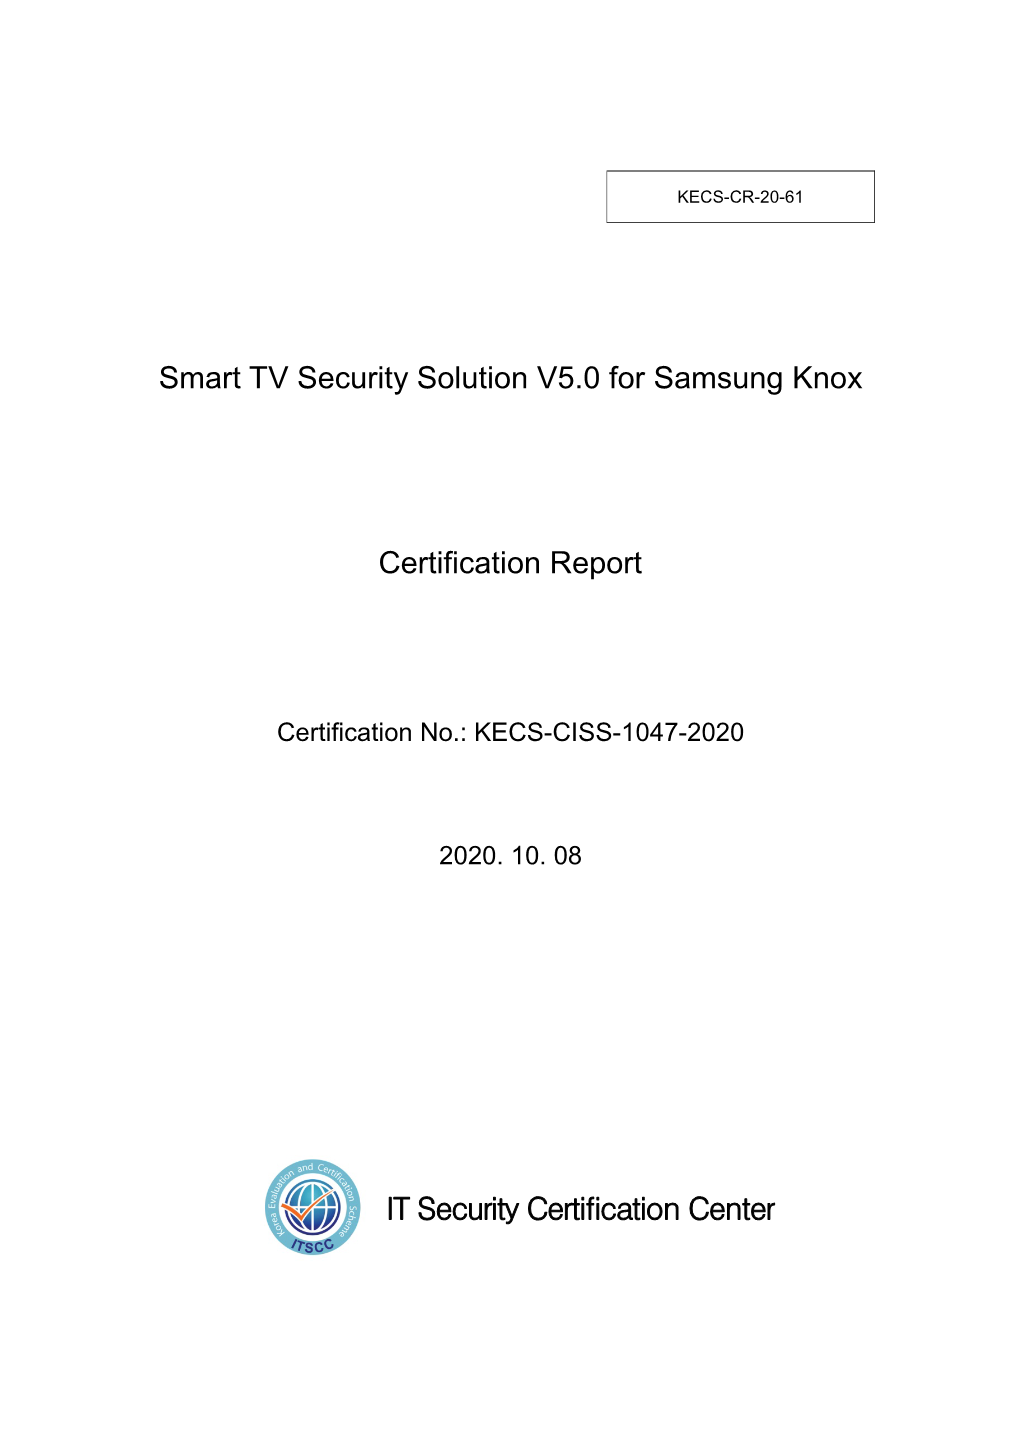 Smart TV Security Solution V5.0 for Samsung Knox Certification Report